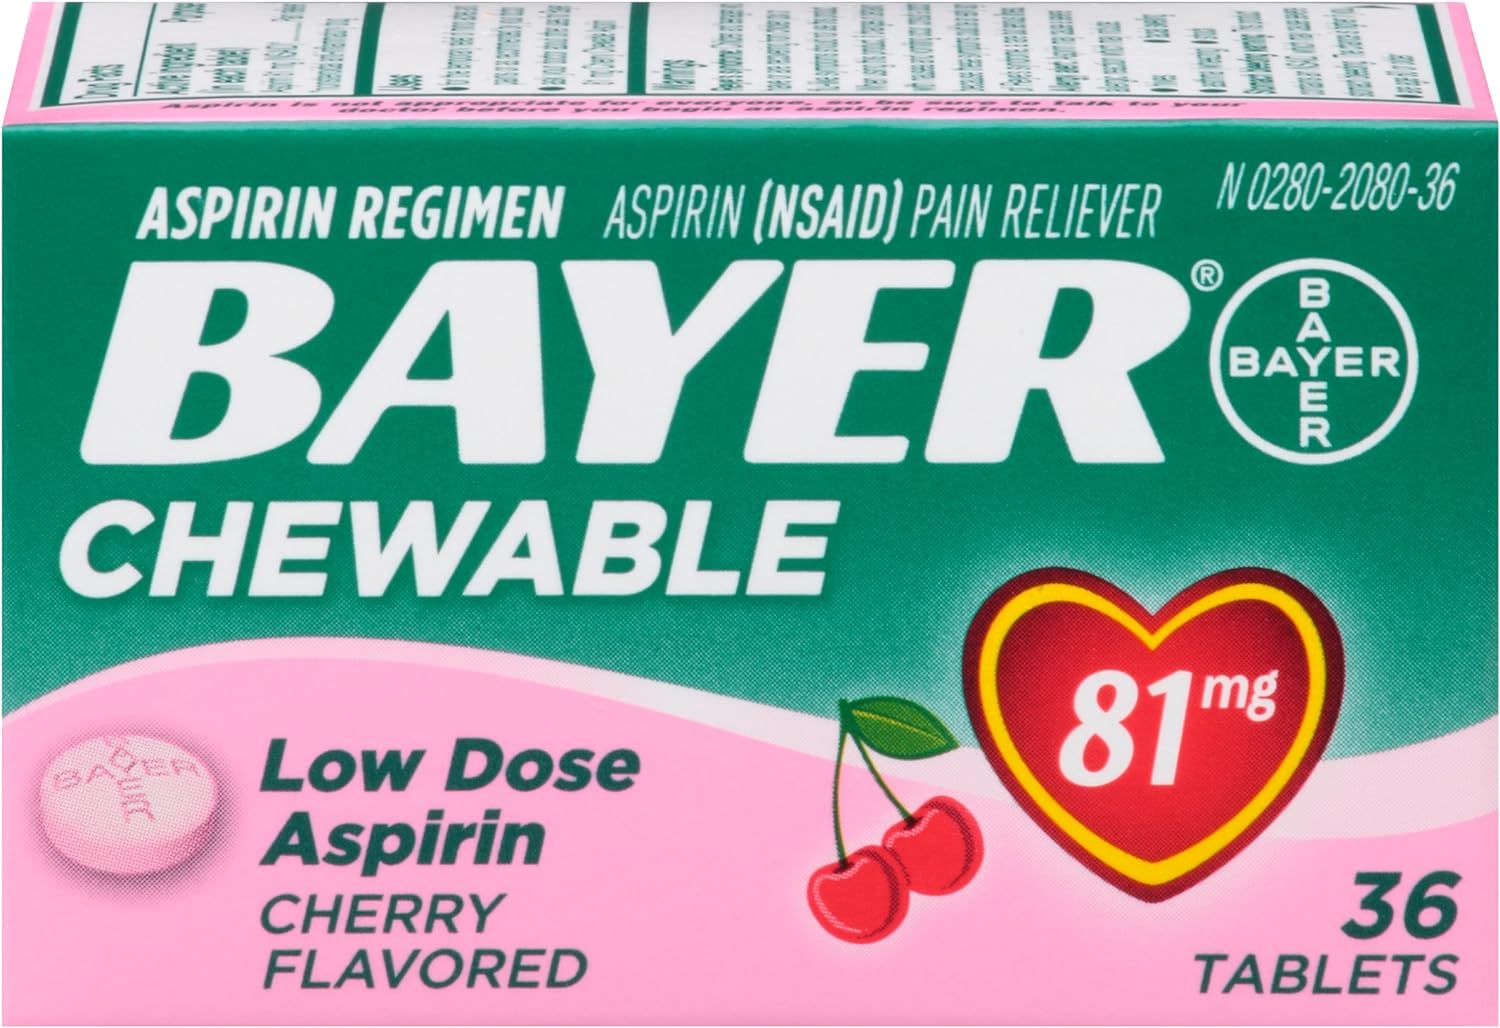 Bayer Aspirin Regimen, 81mg Chewable Tablets, Pain Reli